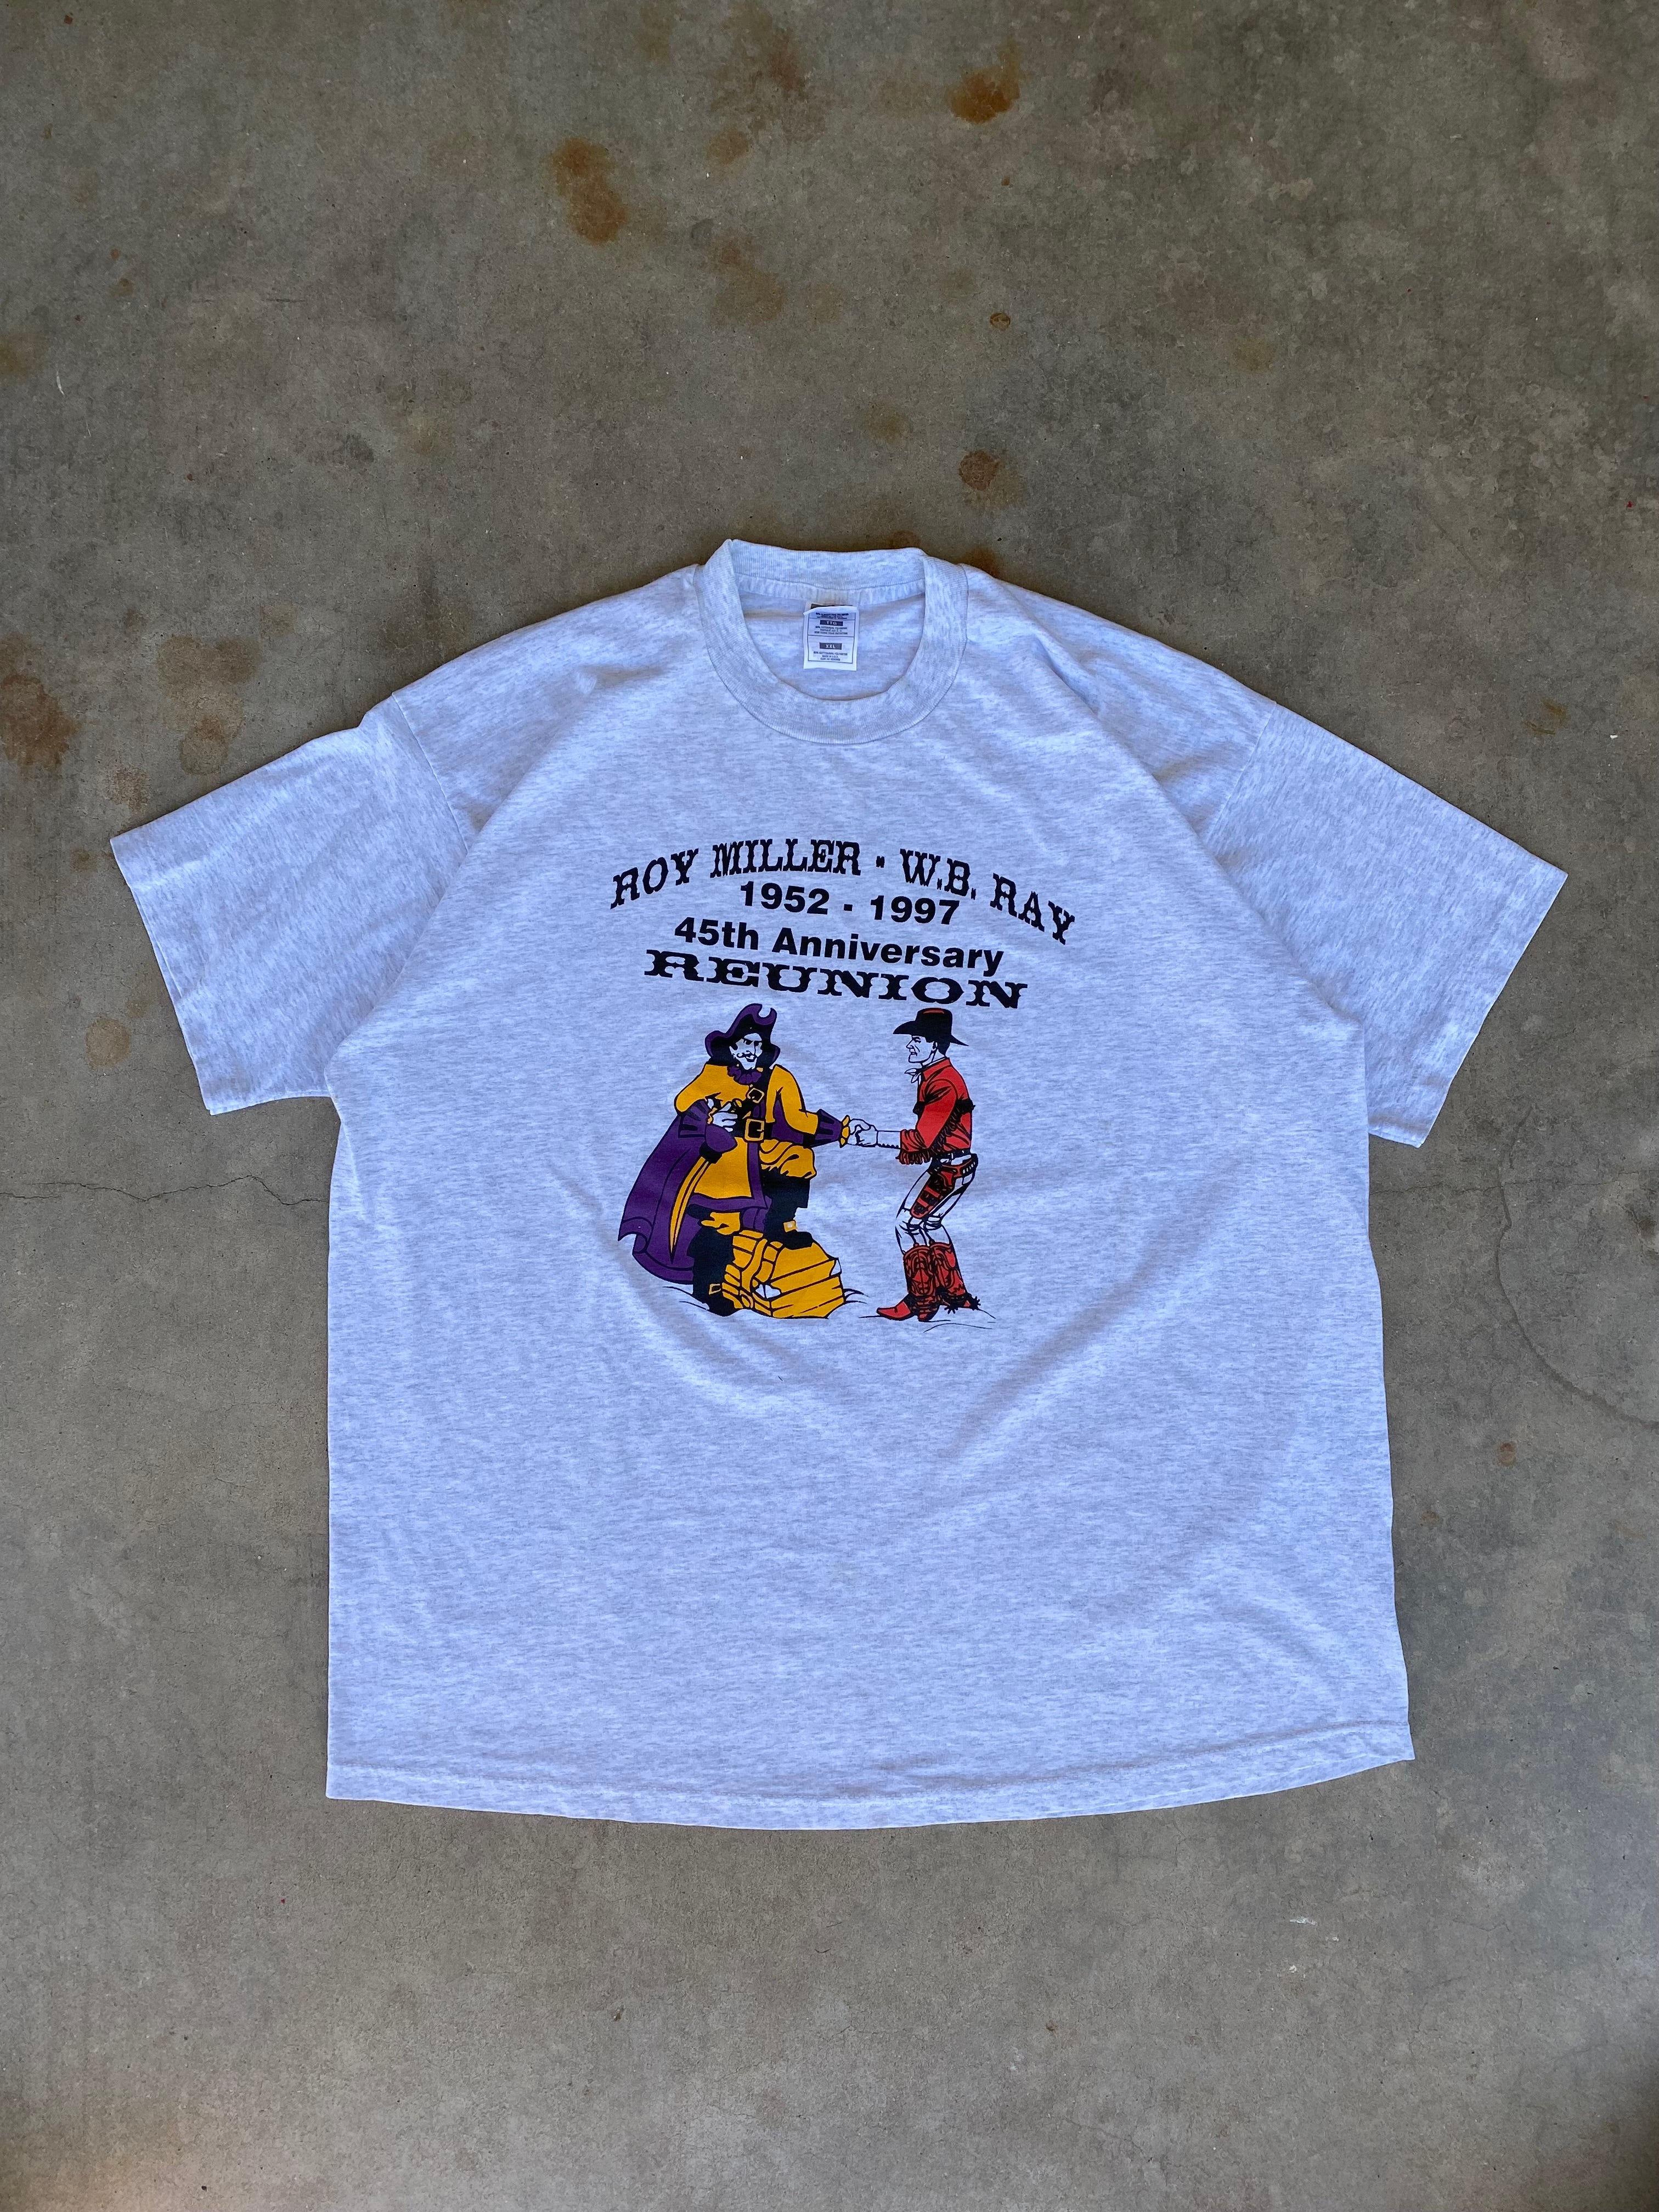 1997 Roy Miller/W.B. Ray Reunion T-Shirt